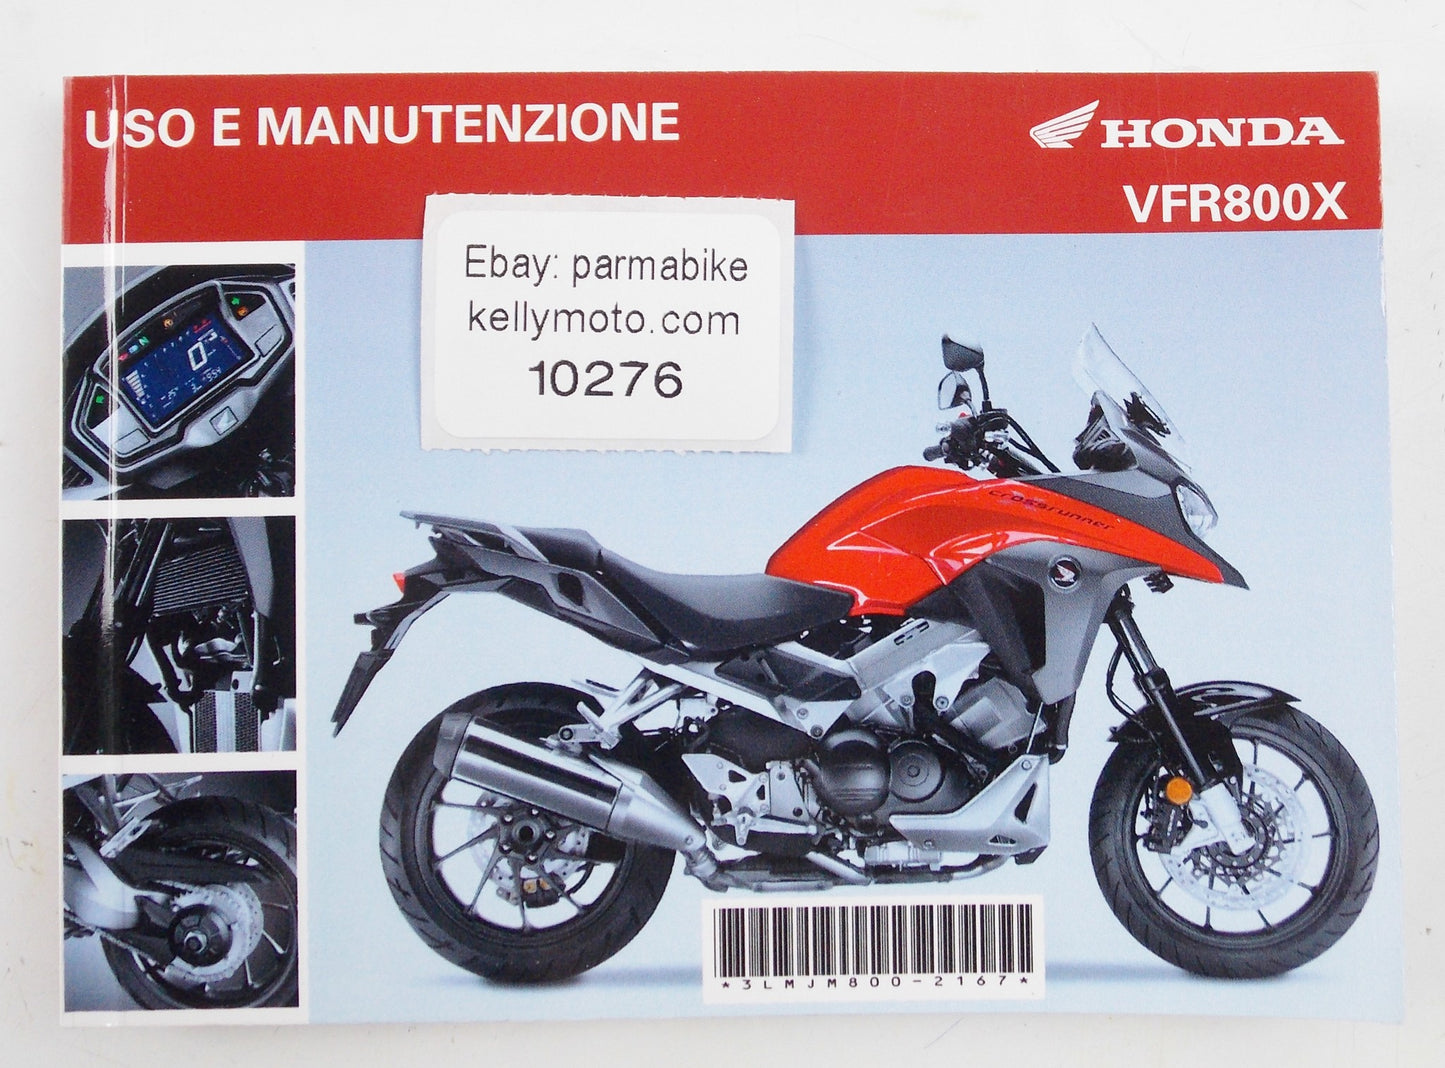 HONDA VFR800X USE MAINTENANCE OWNER BOOK MANUAL ITALIAN 137 PAGES - MotoRaider